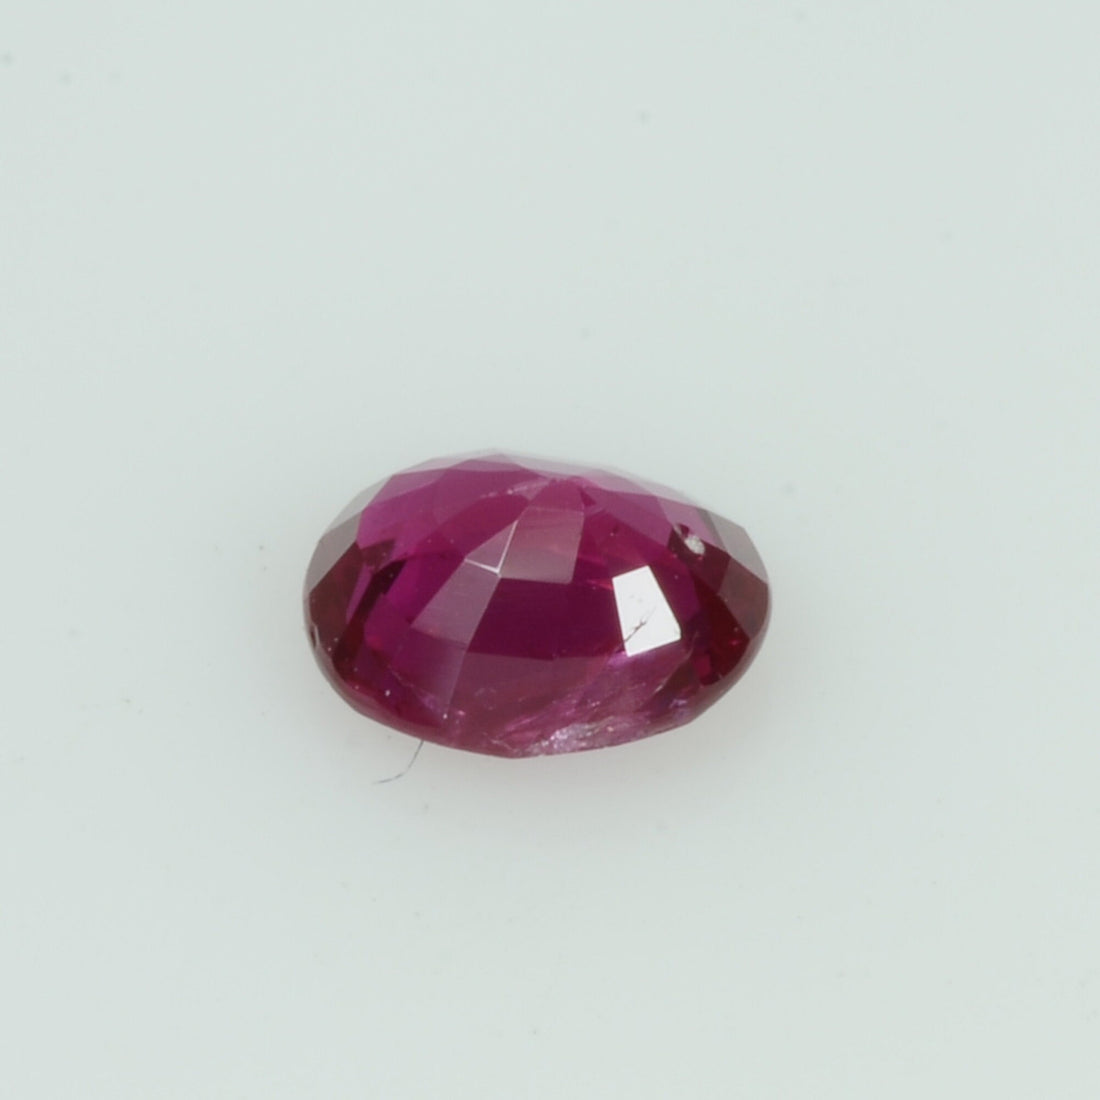 0.50 Cts Unheated Natural Burma Ruby Loose Gemstone Oval Cut